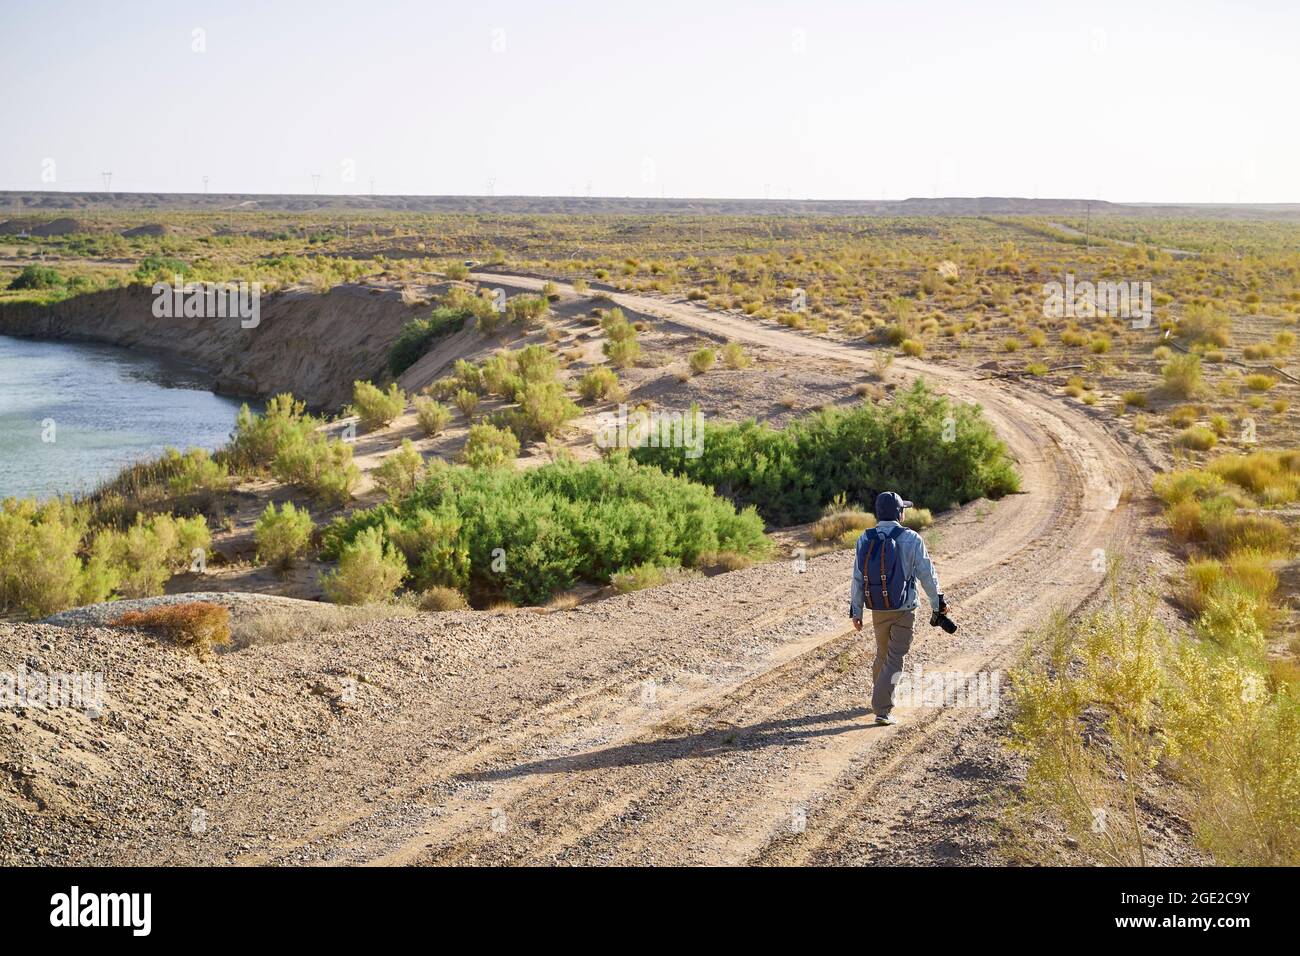 asian man photographer walking on dirt road in gobi desert looking at landscape at sunset Stock Photo